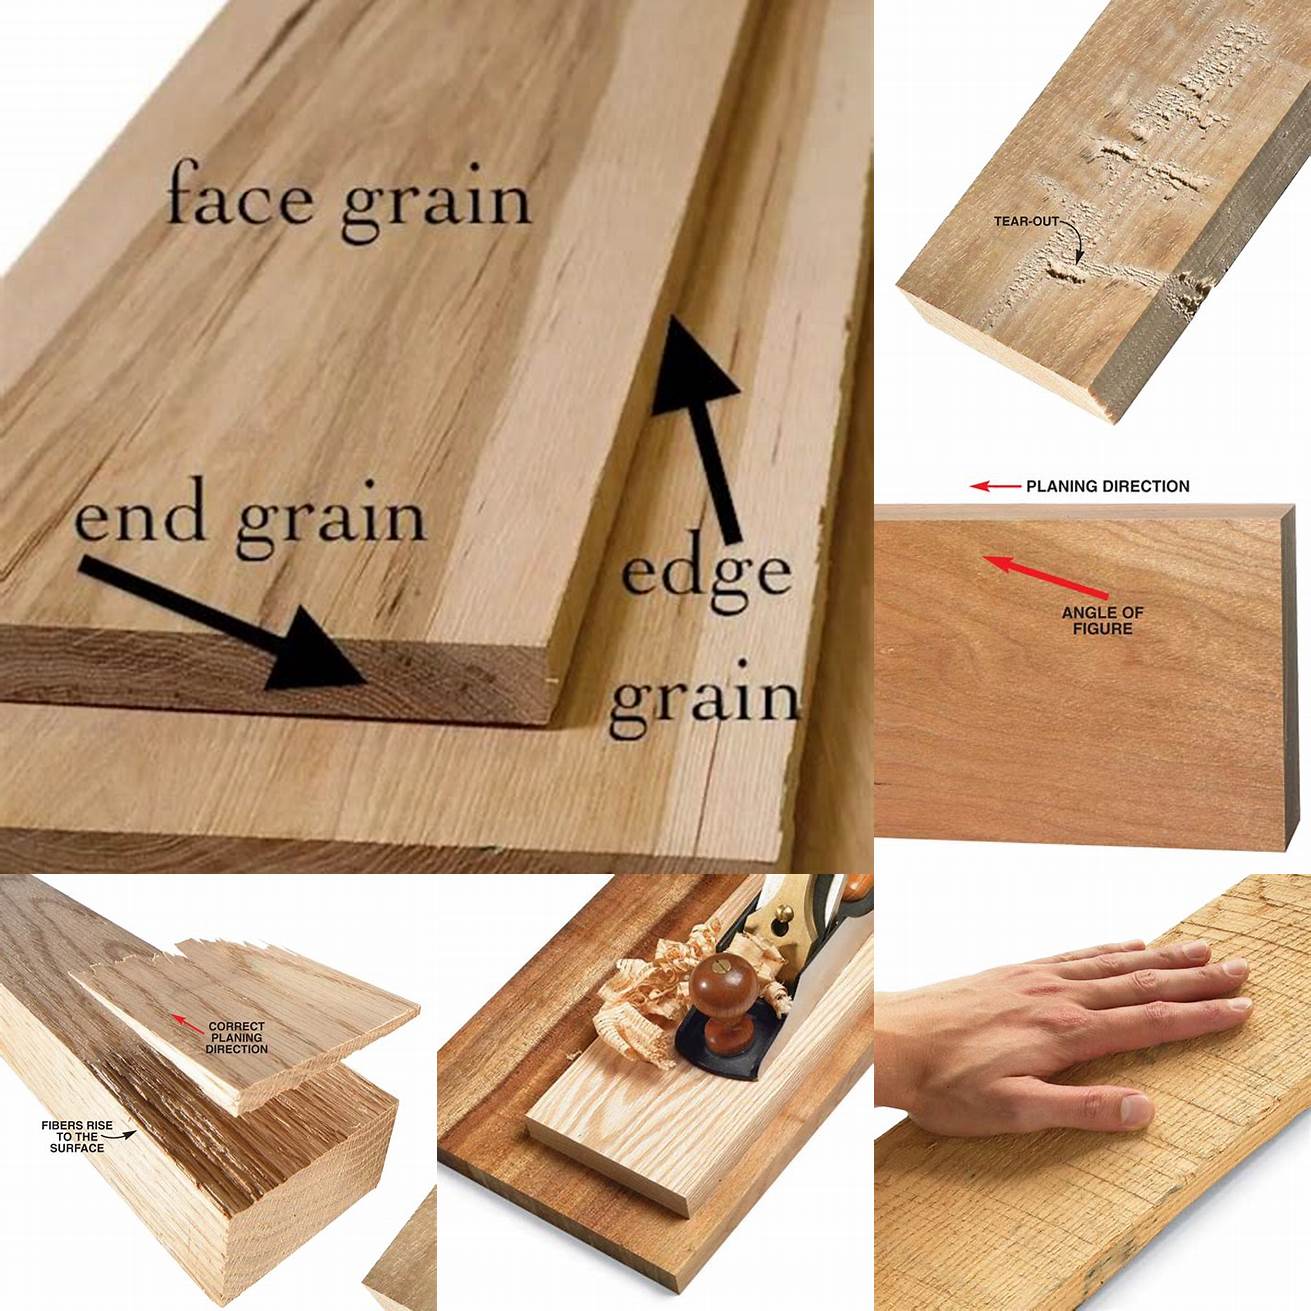 Wood Grain Directions